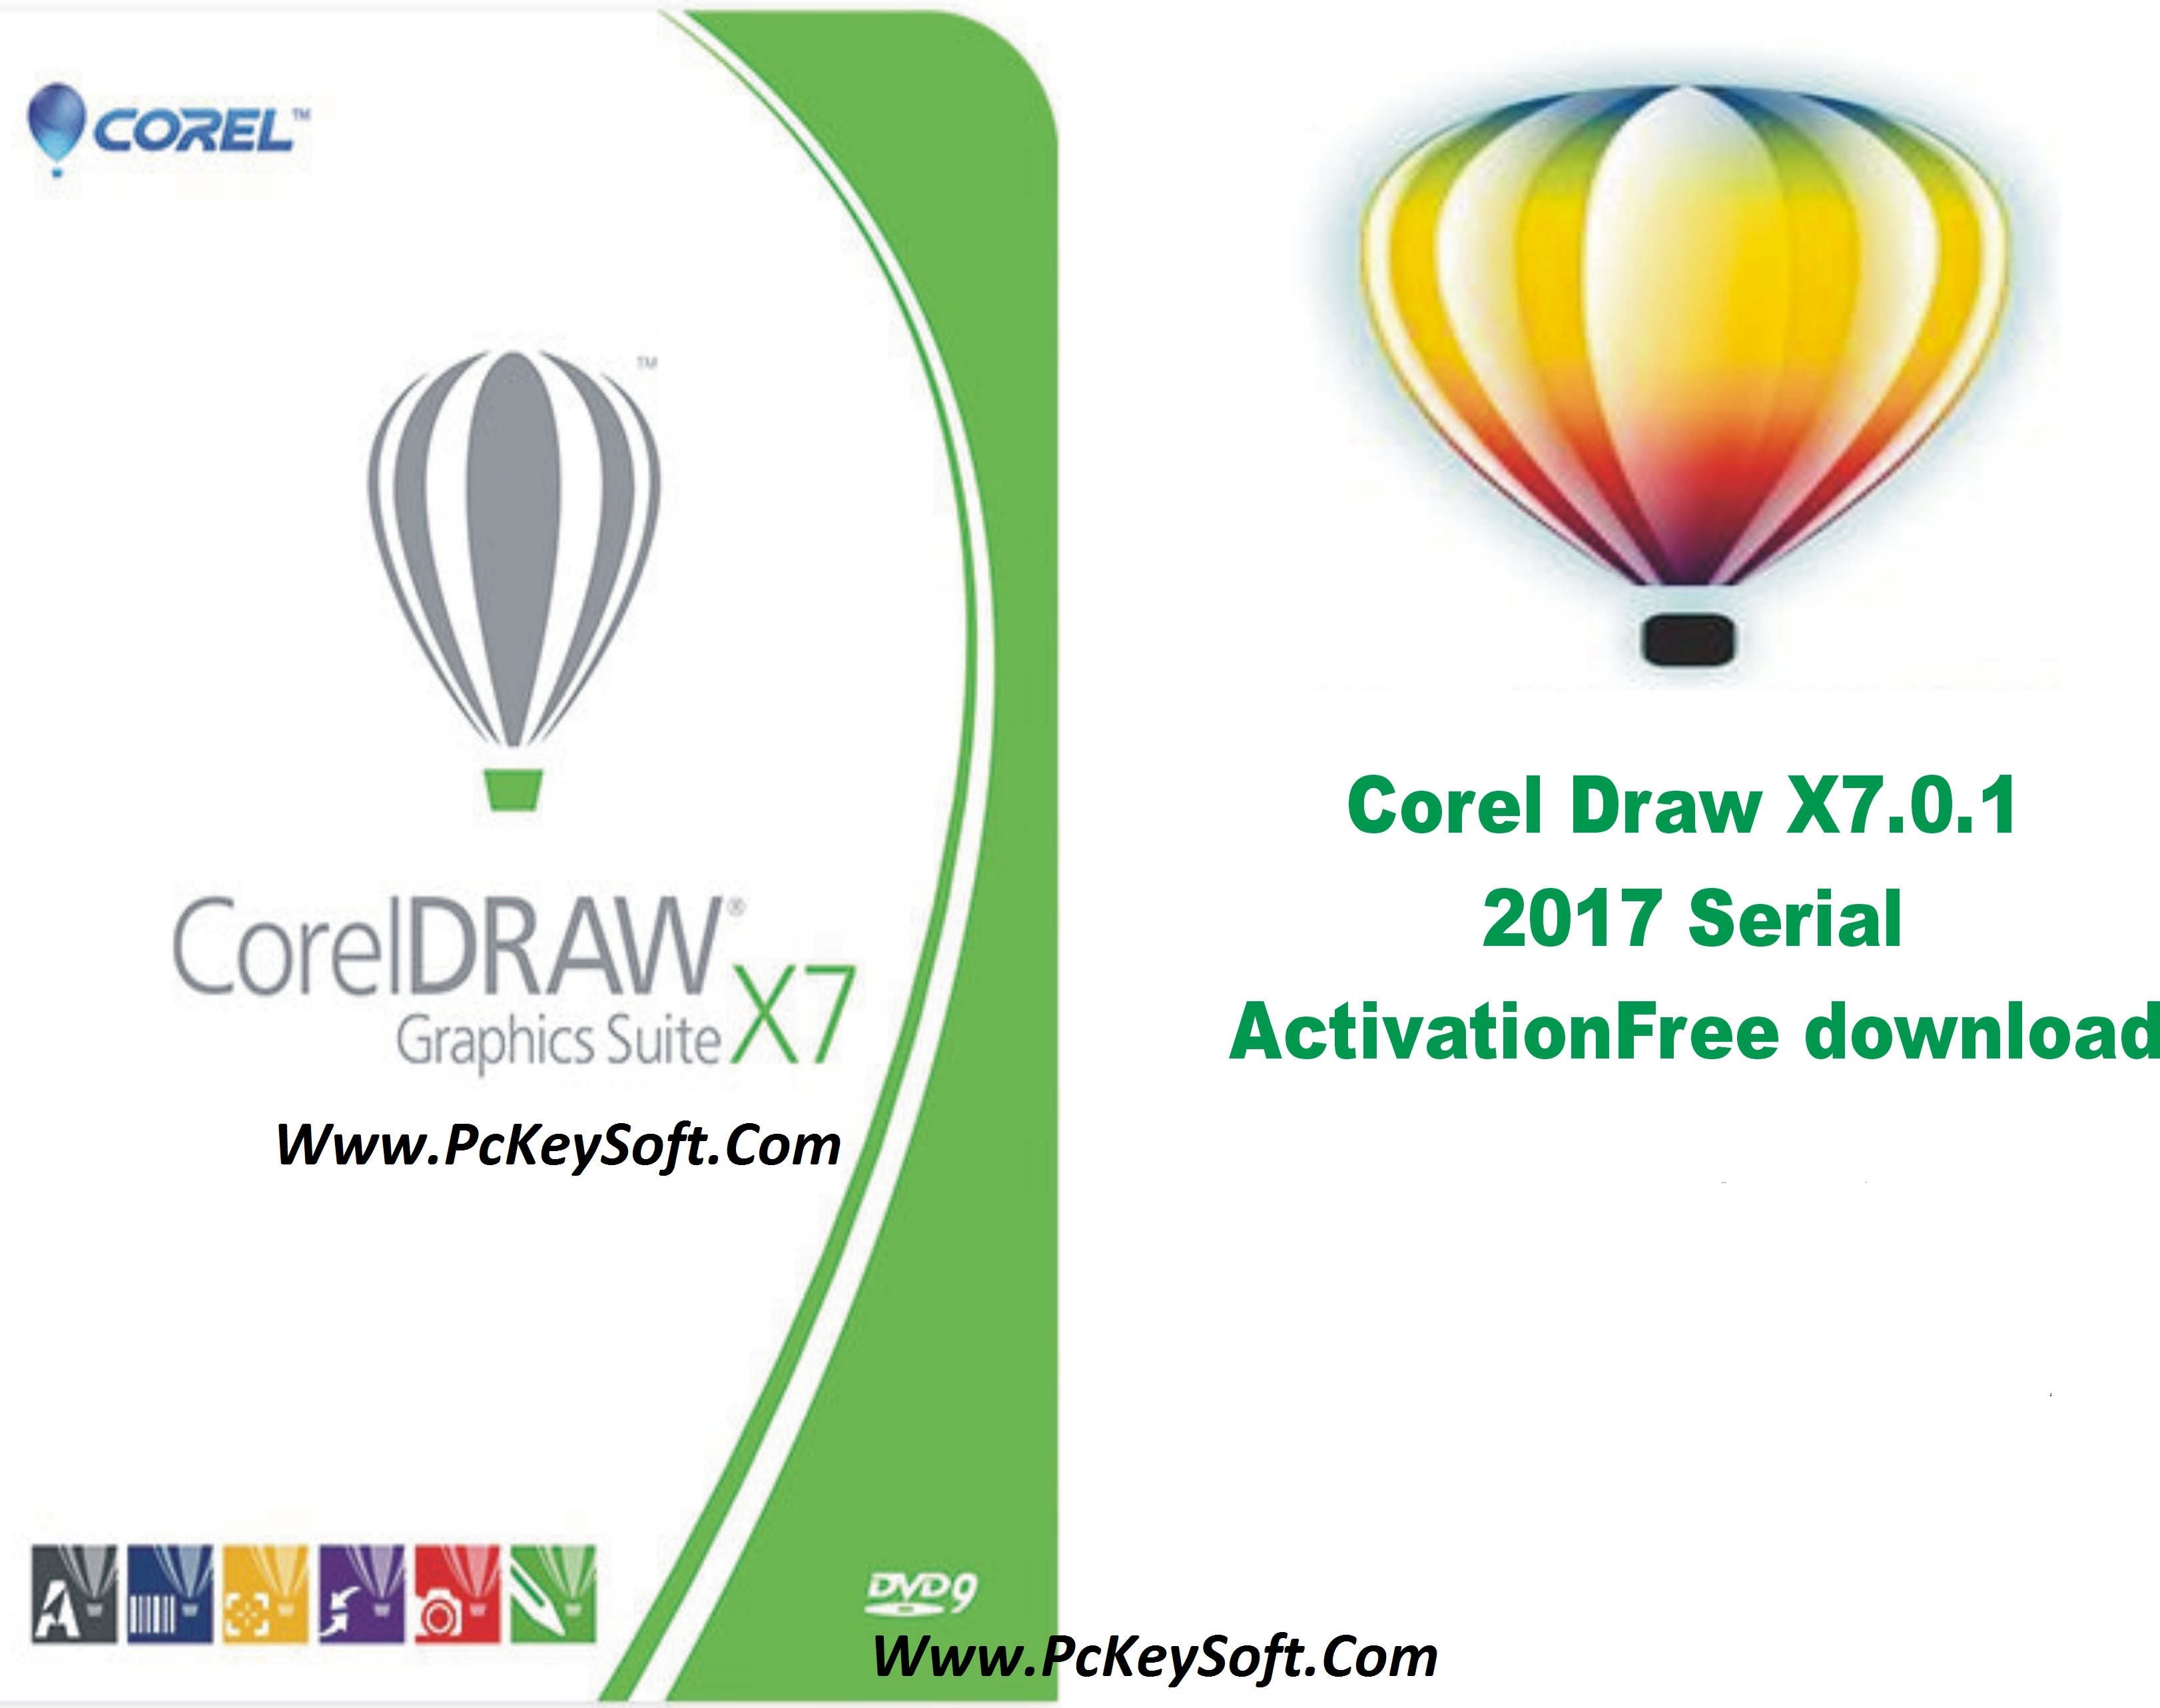 corel draw x7 with keygen full version cracked kickass